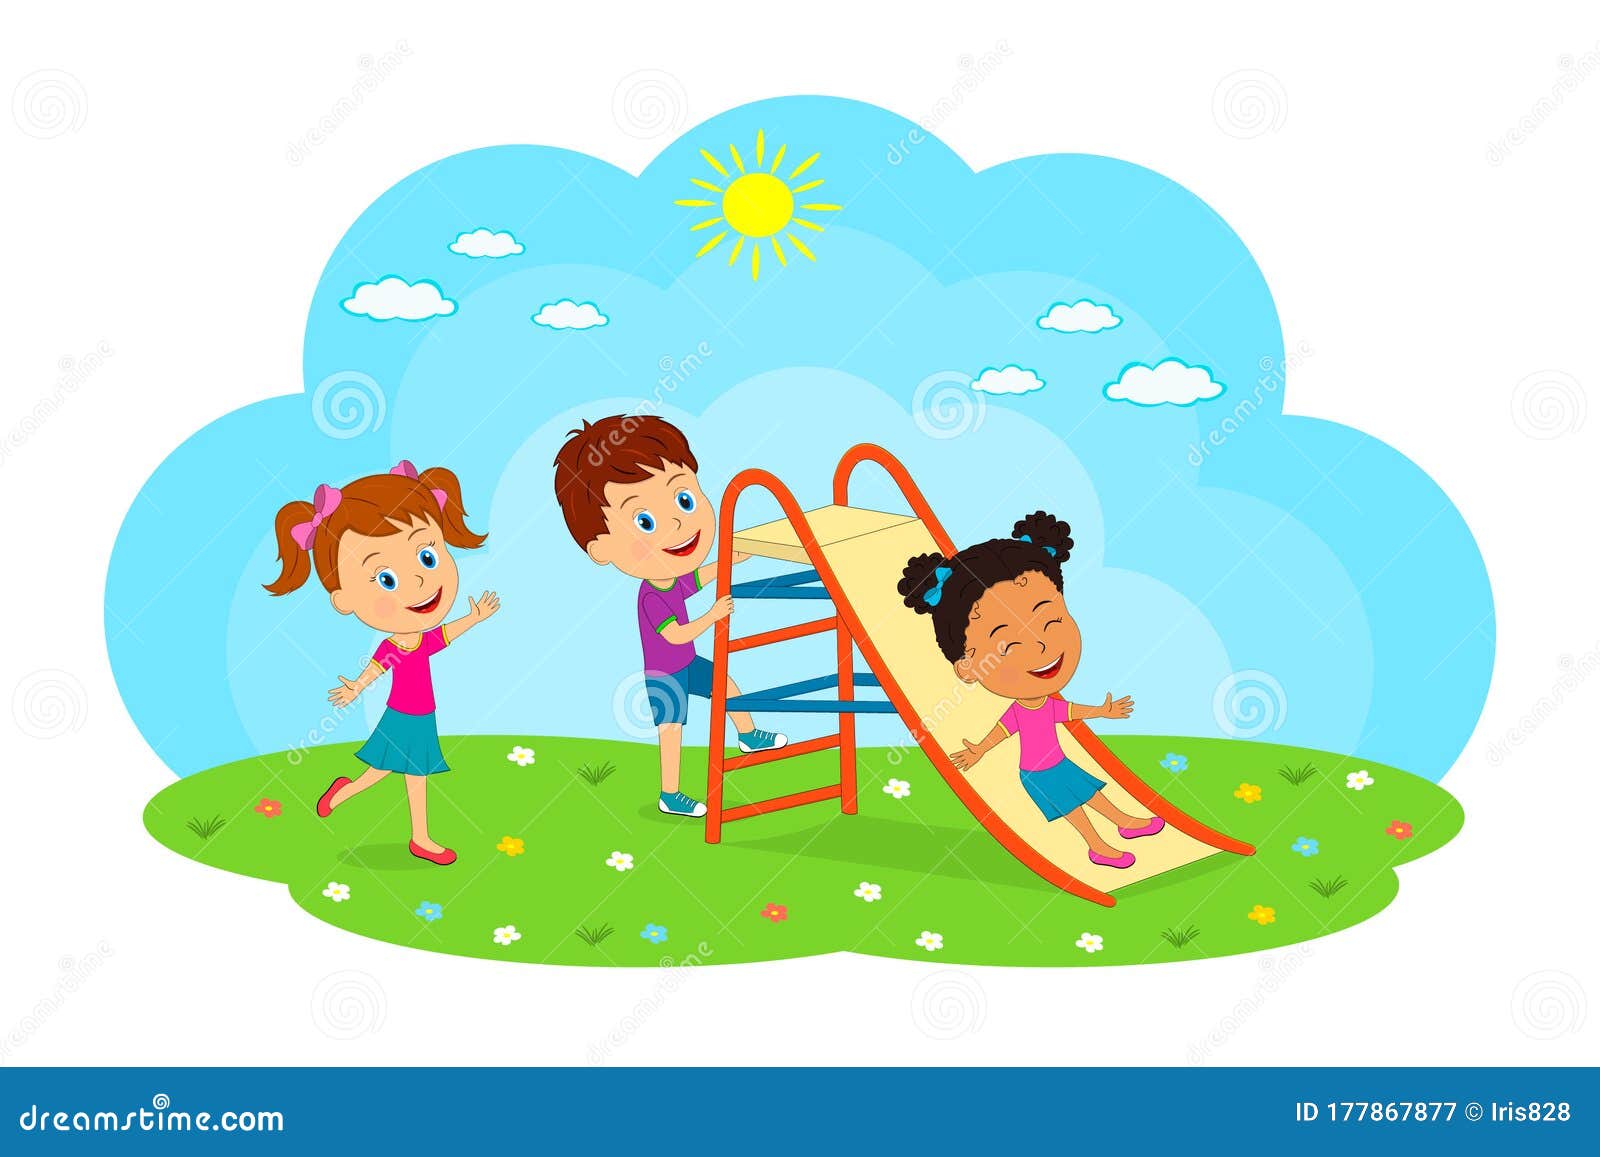 Little Cartoon Kids Play on the Slide Stock Vector - Illustration of cute,  people: 177867877